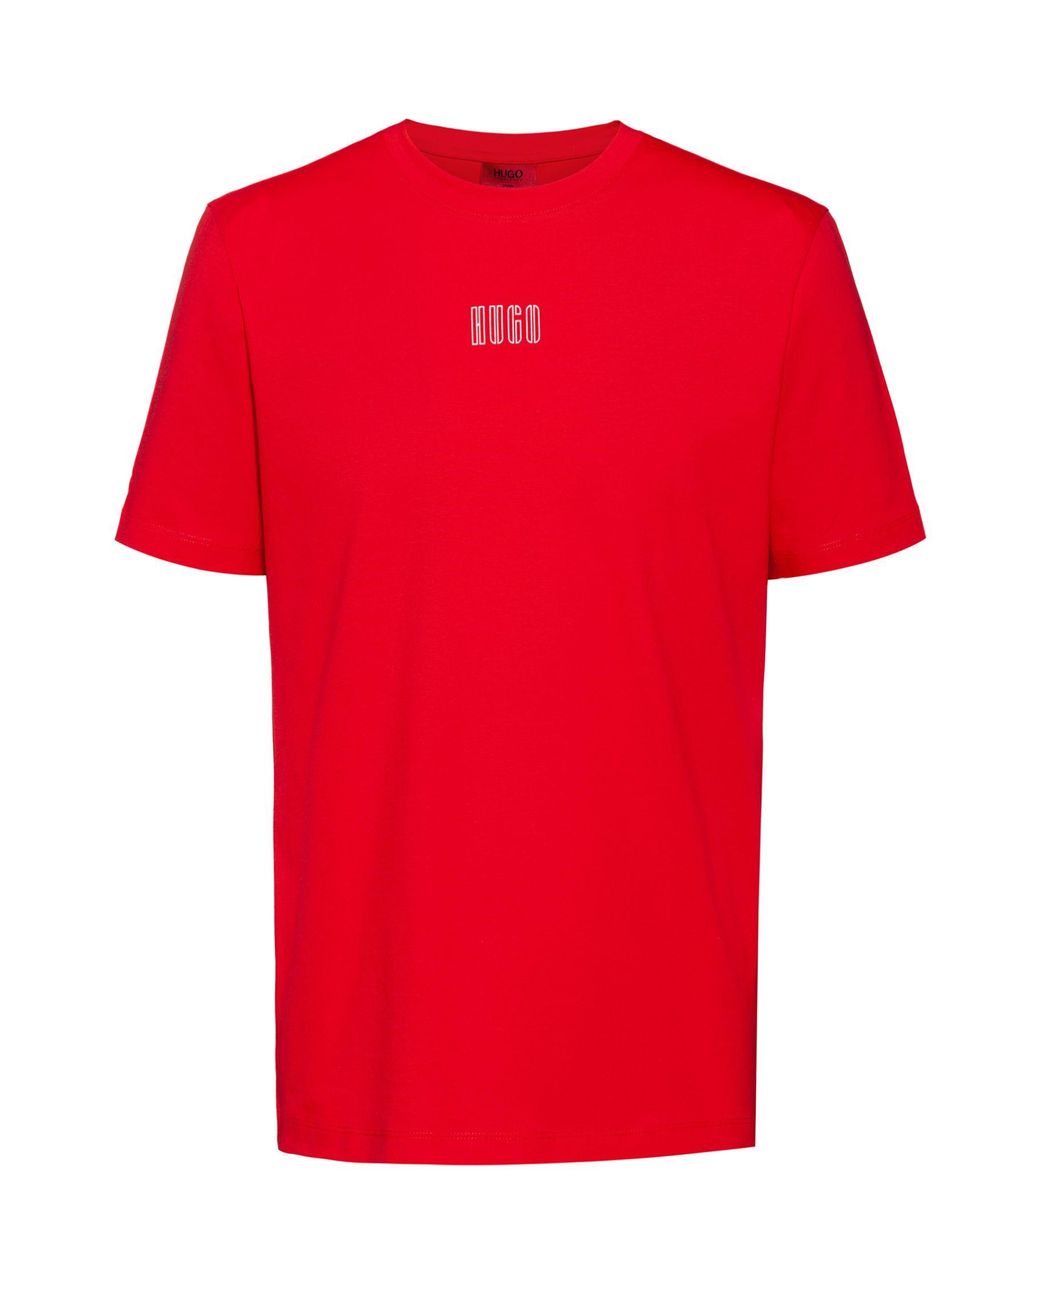 BOSS by Hugo Boss Unisex Cotton T Shirt With New Season Logo Print in ...